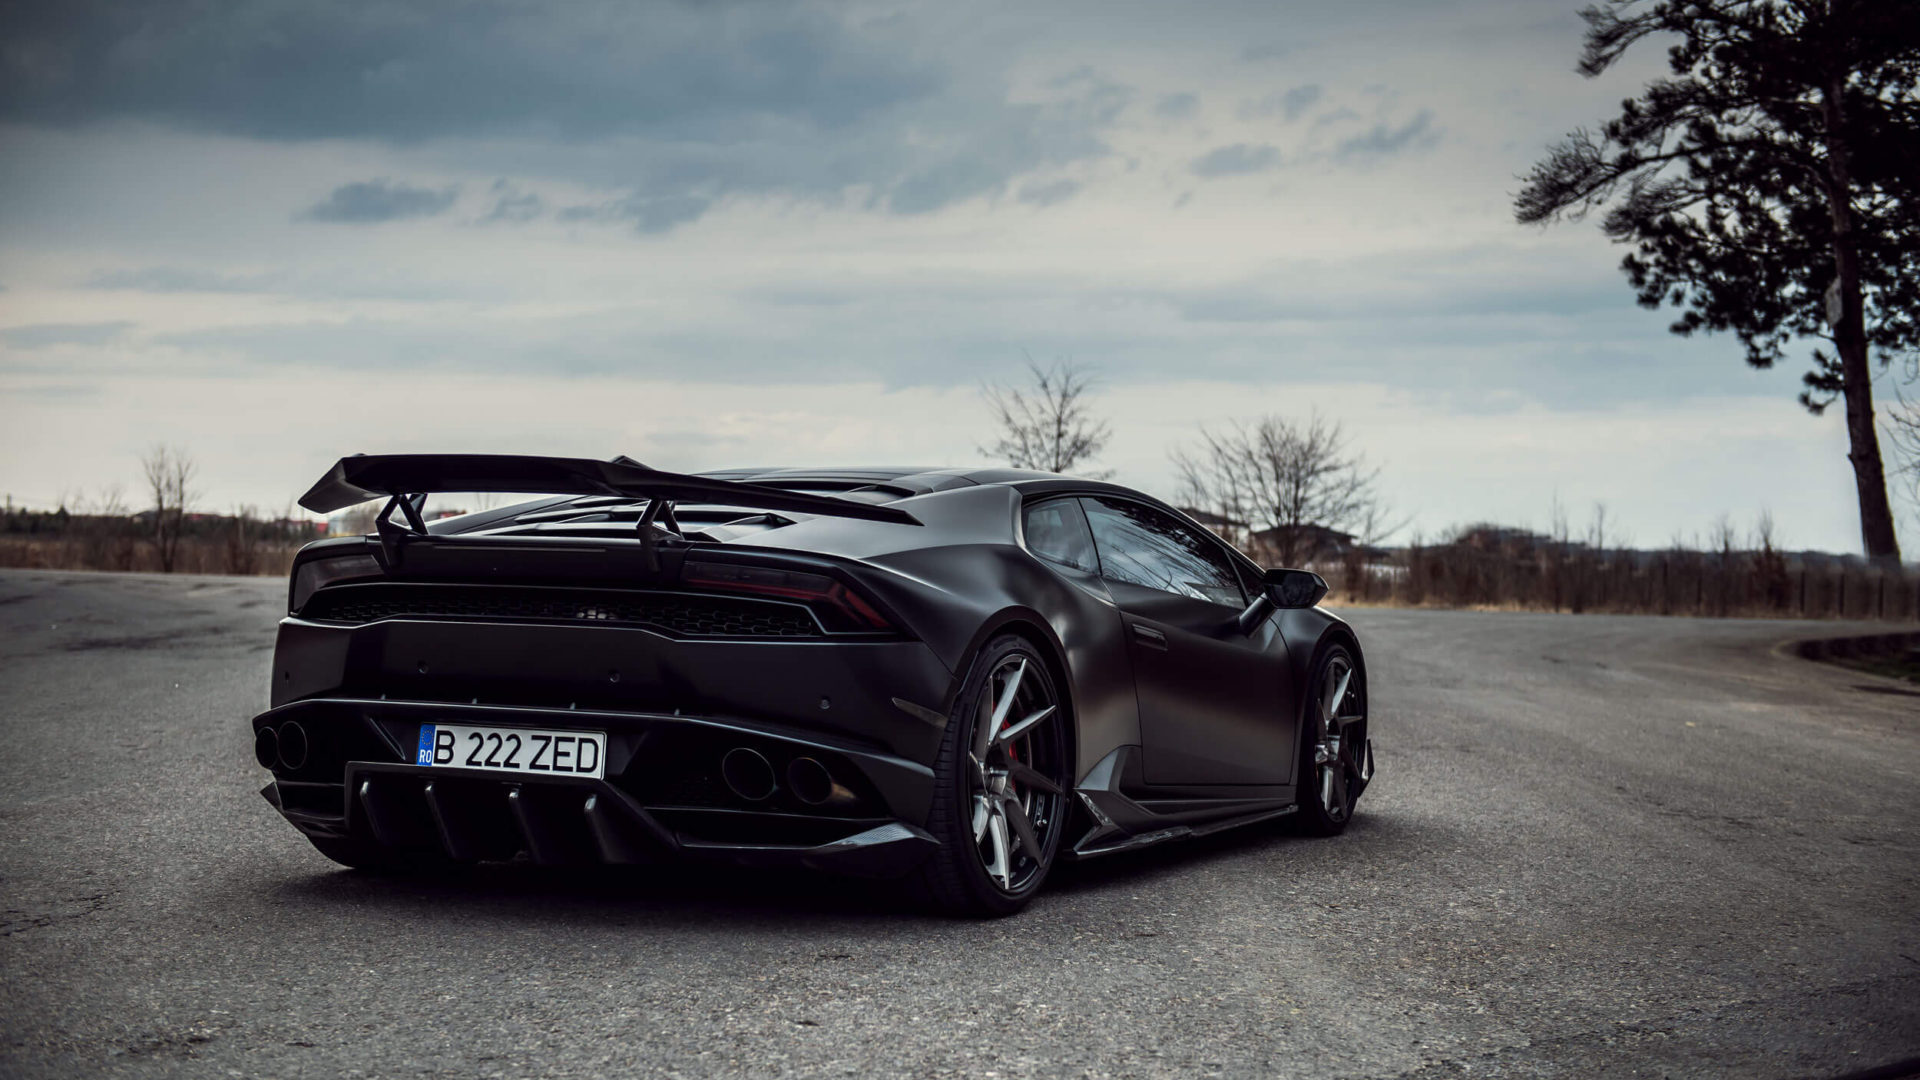 https://img.custom-wheels.de/wp-content/uploads/2019/01/Lamborghini-Huracan-LP-610-4-Felgen-Z-Performance-Wheels-ZP.FORGED-3-Super-Deep-Concave-Brushed-Gunmetal-Gloss-Black-Lip-MD-Exclusive-Cardesign-1-1920x1080.jpg